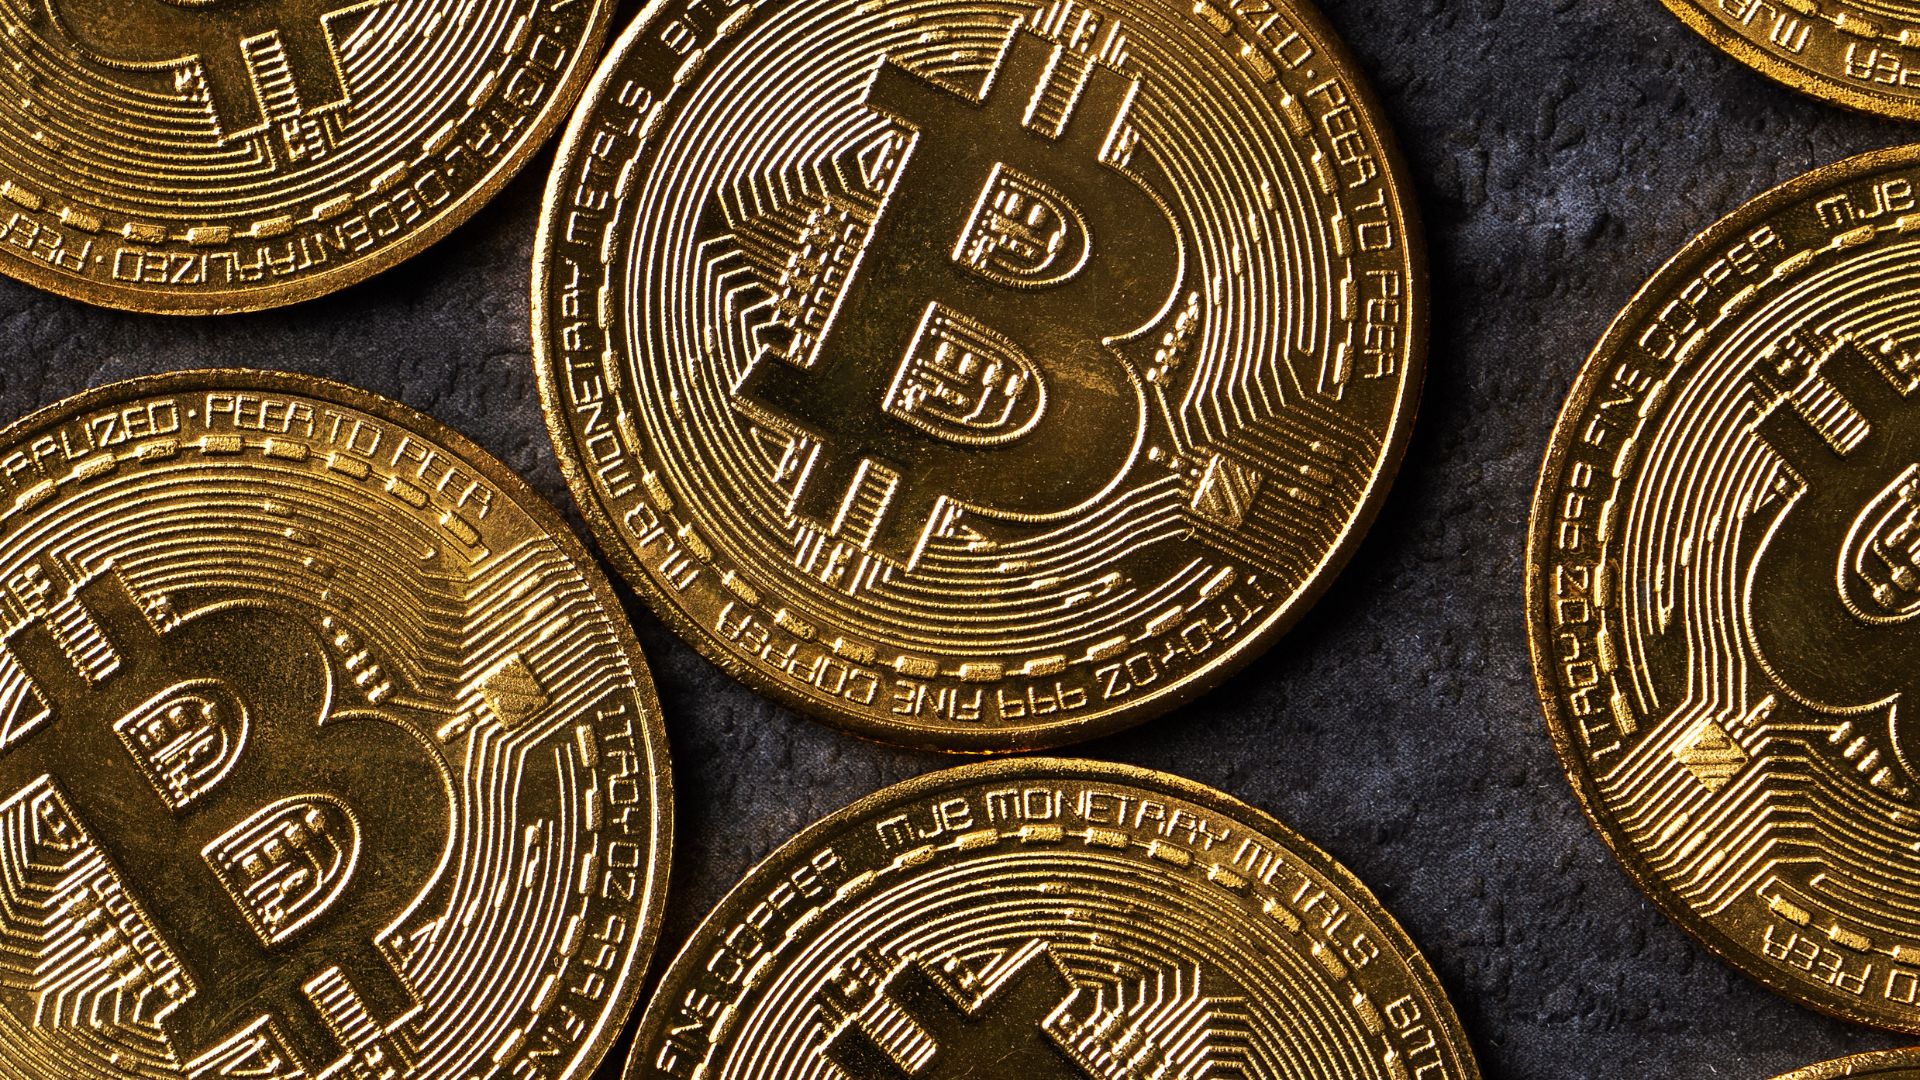 O Bitcoin é uma pirâmide financeira?